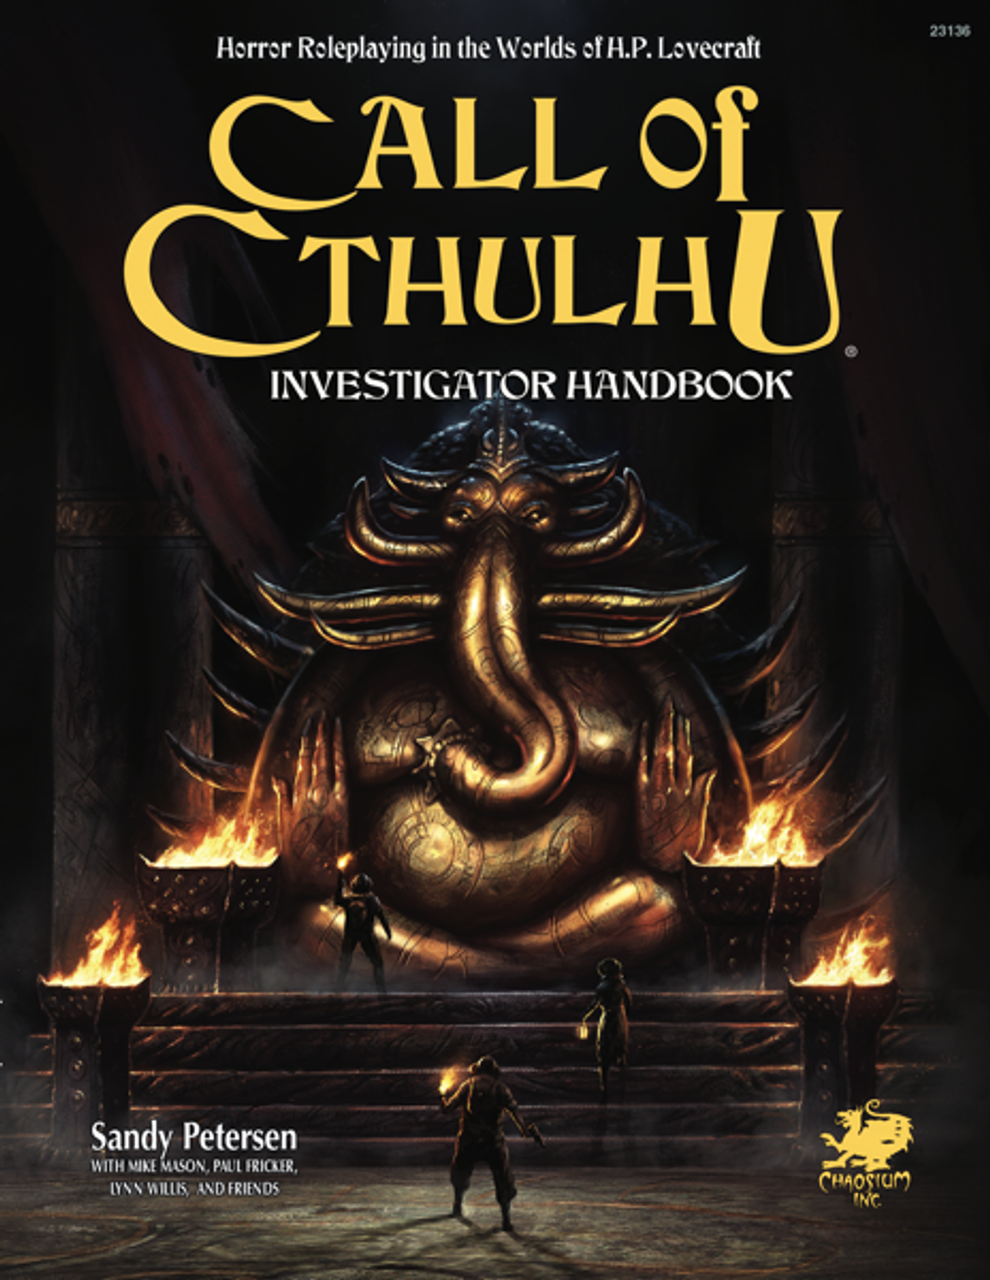 Call of Cthulhu Investigator Handbook - Hardcover